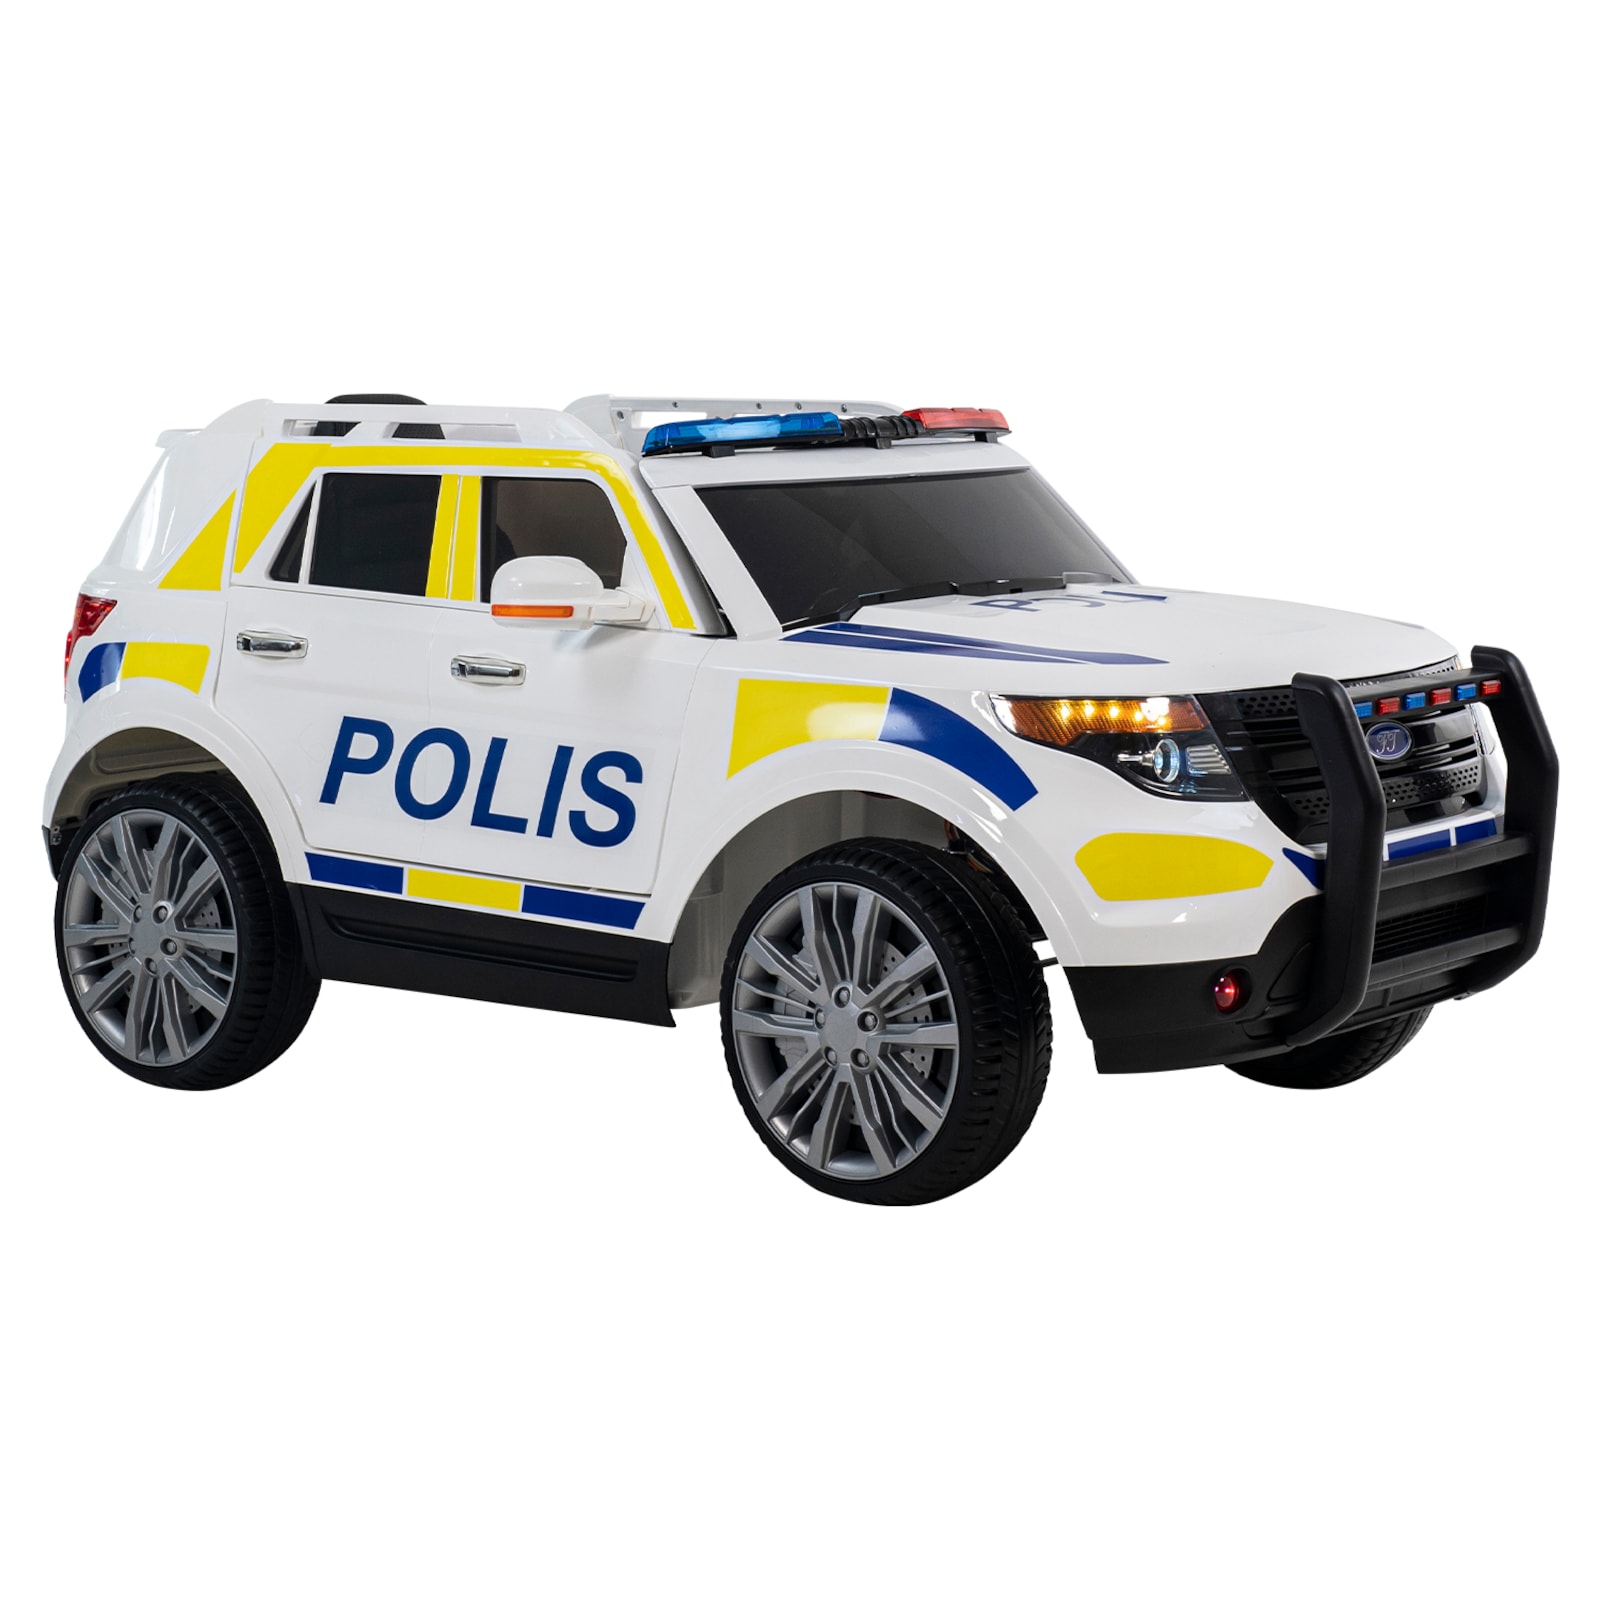 Elbil polis för barn